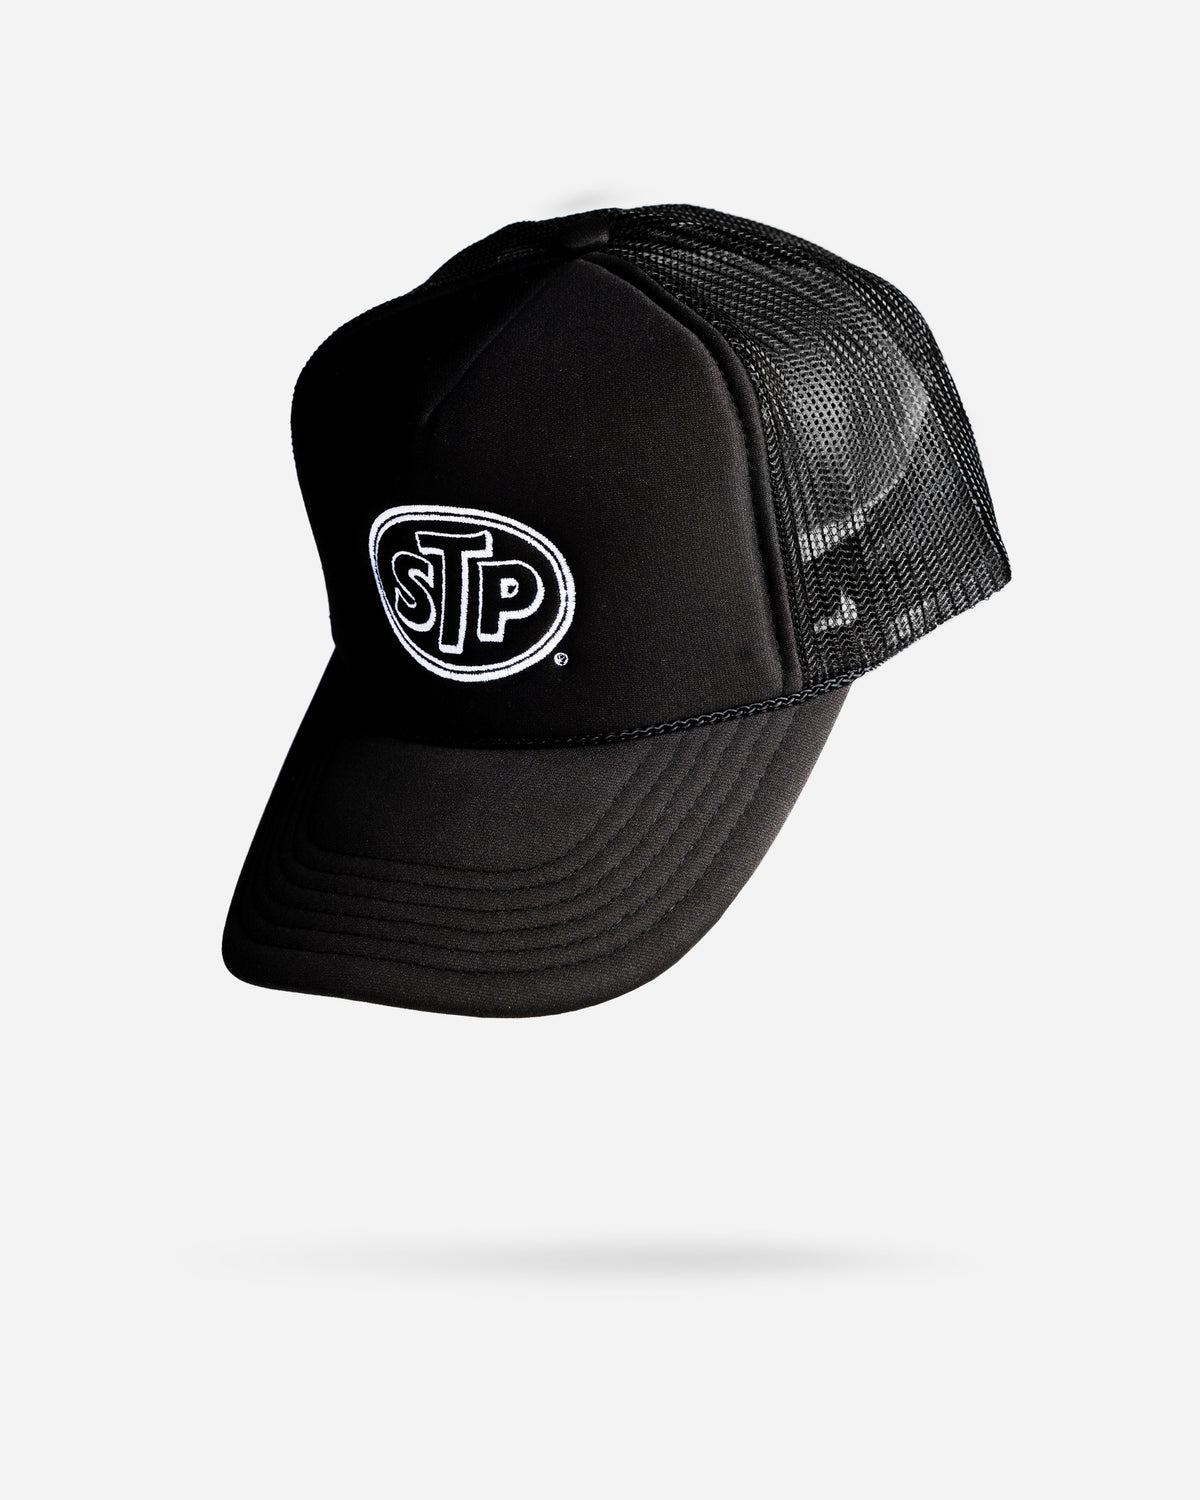 STP Black Trucker Hat